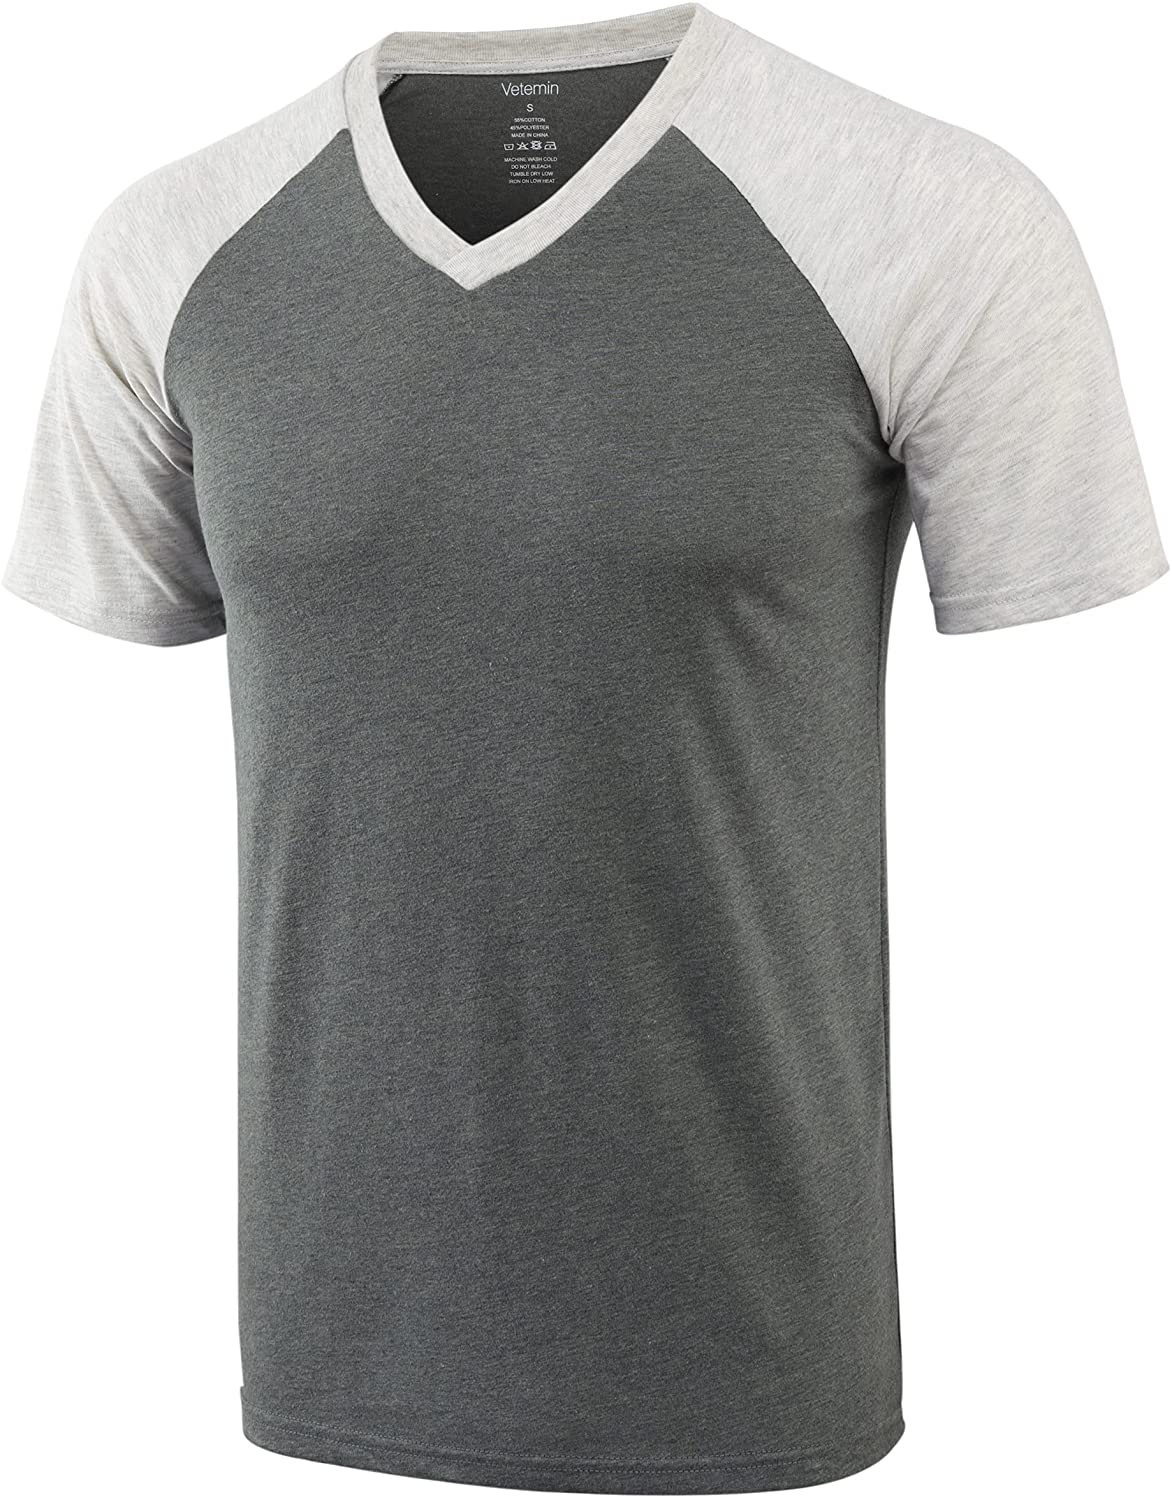 Vetemin Men's Casual Breathable Tagless Active Hiking Baseball V Neck T Shirts 